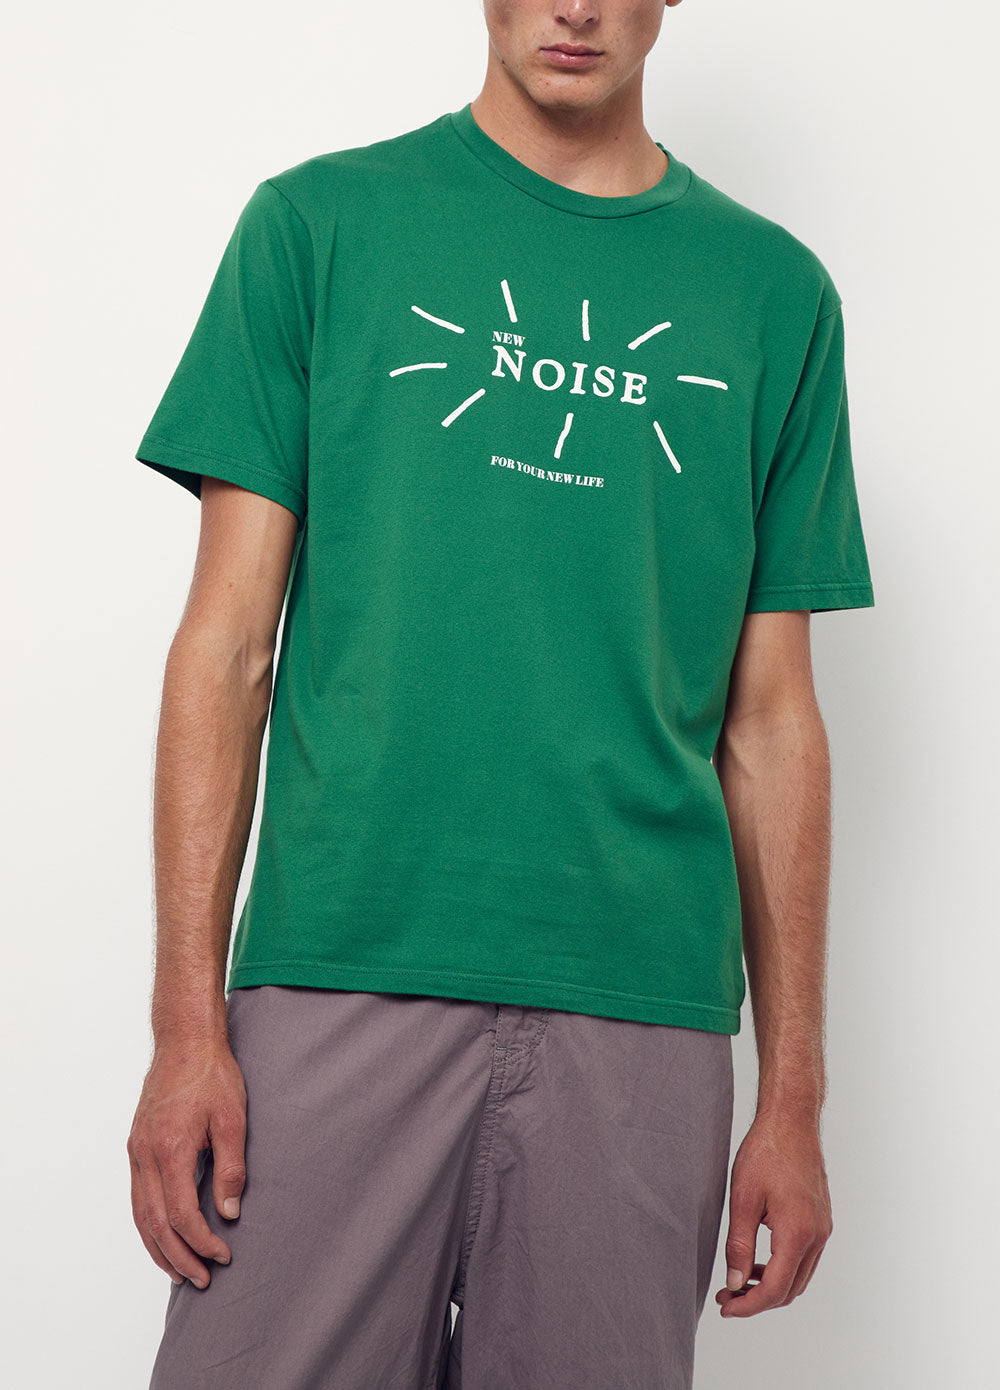 New Noise T-shirt